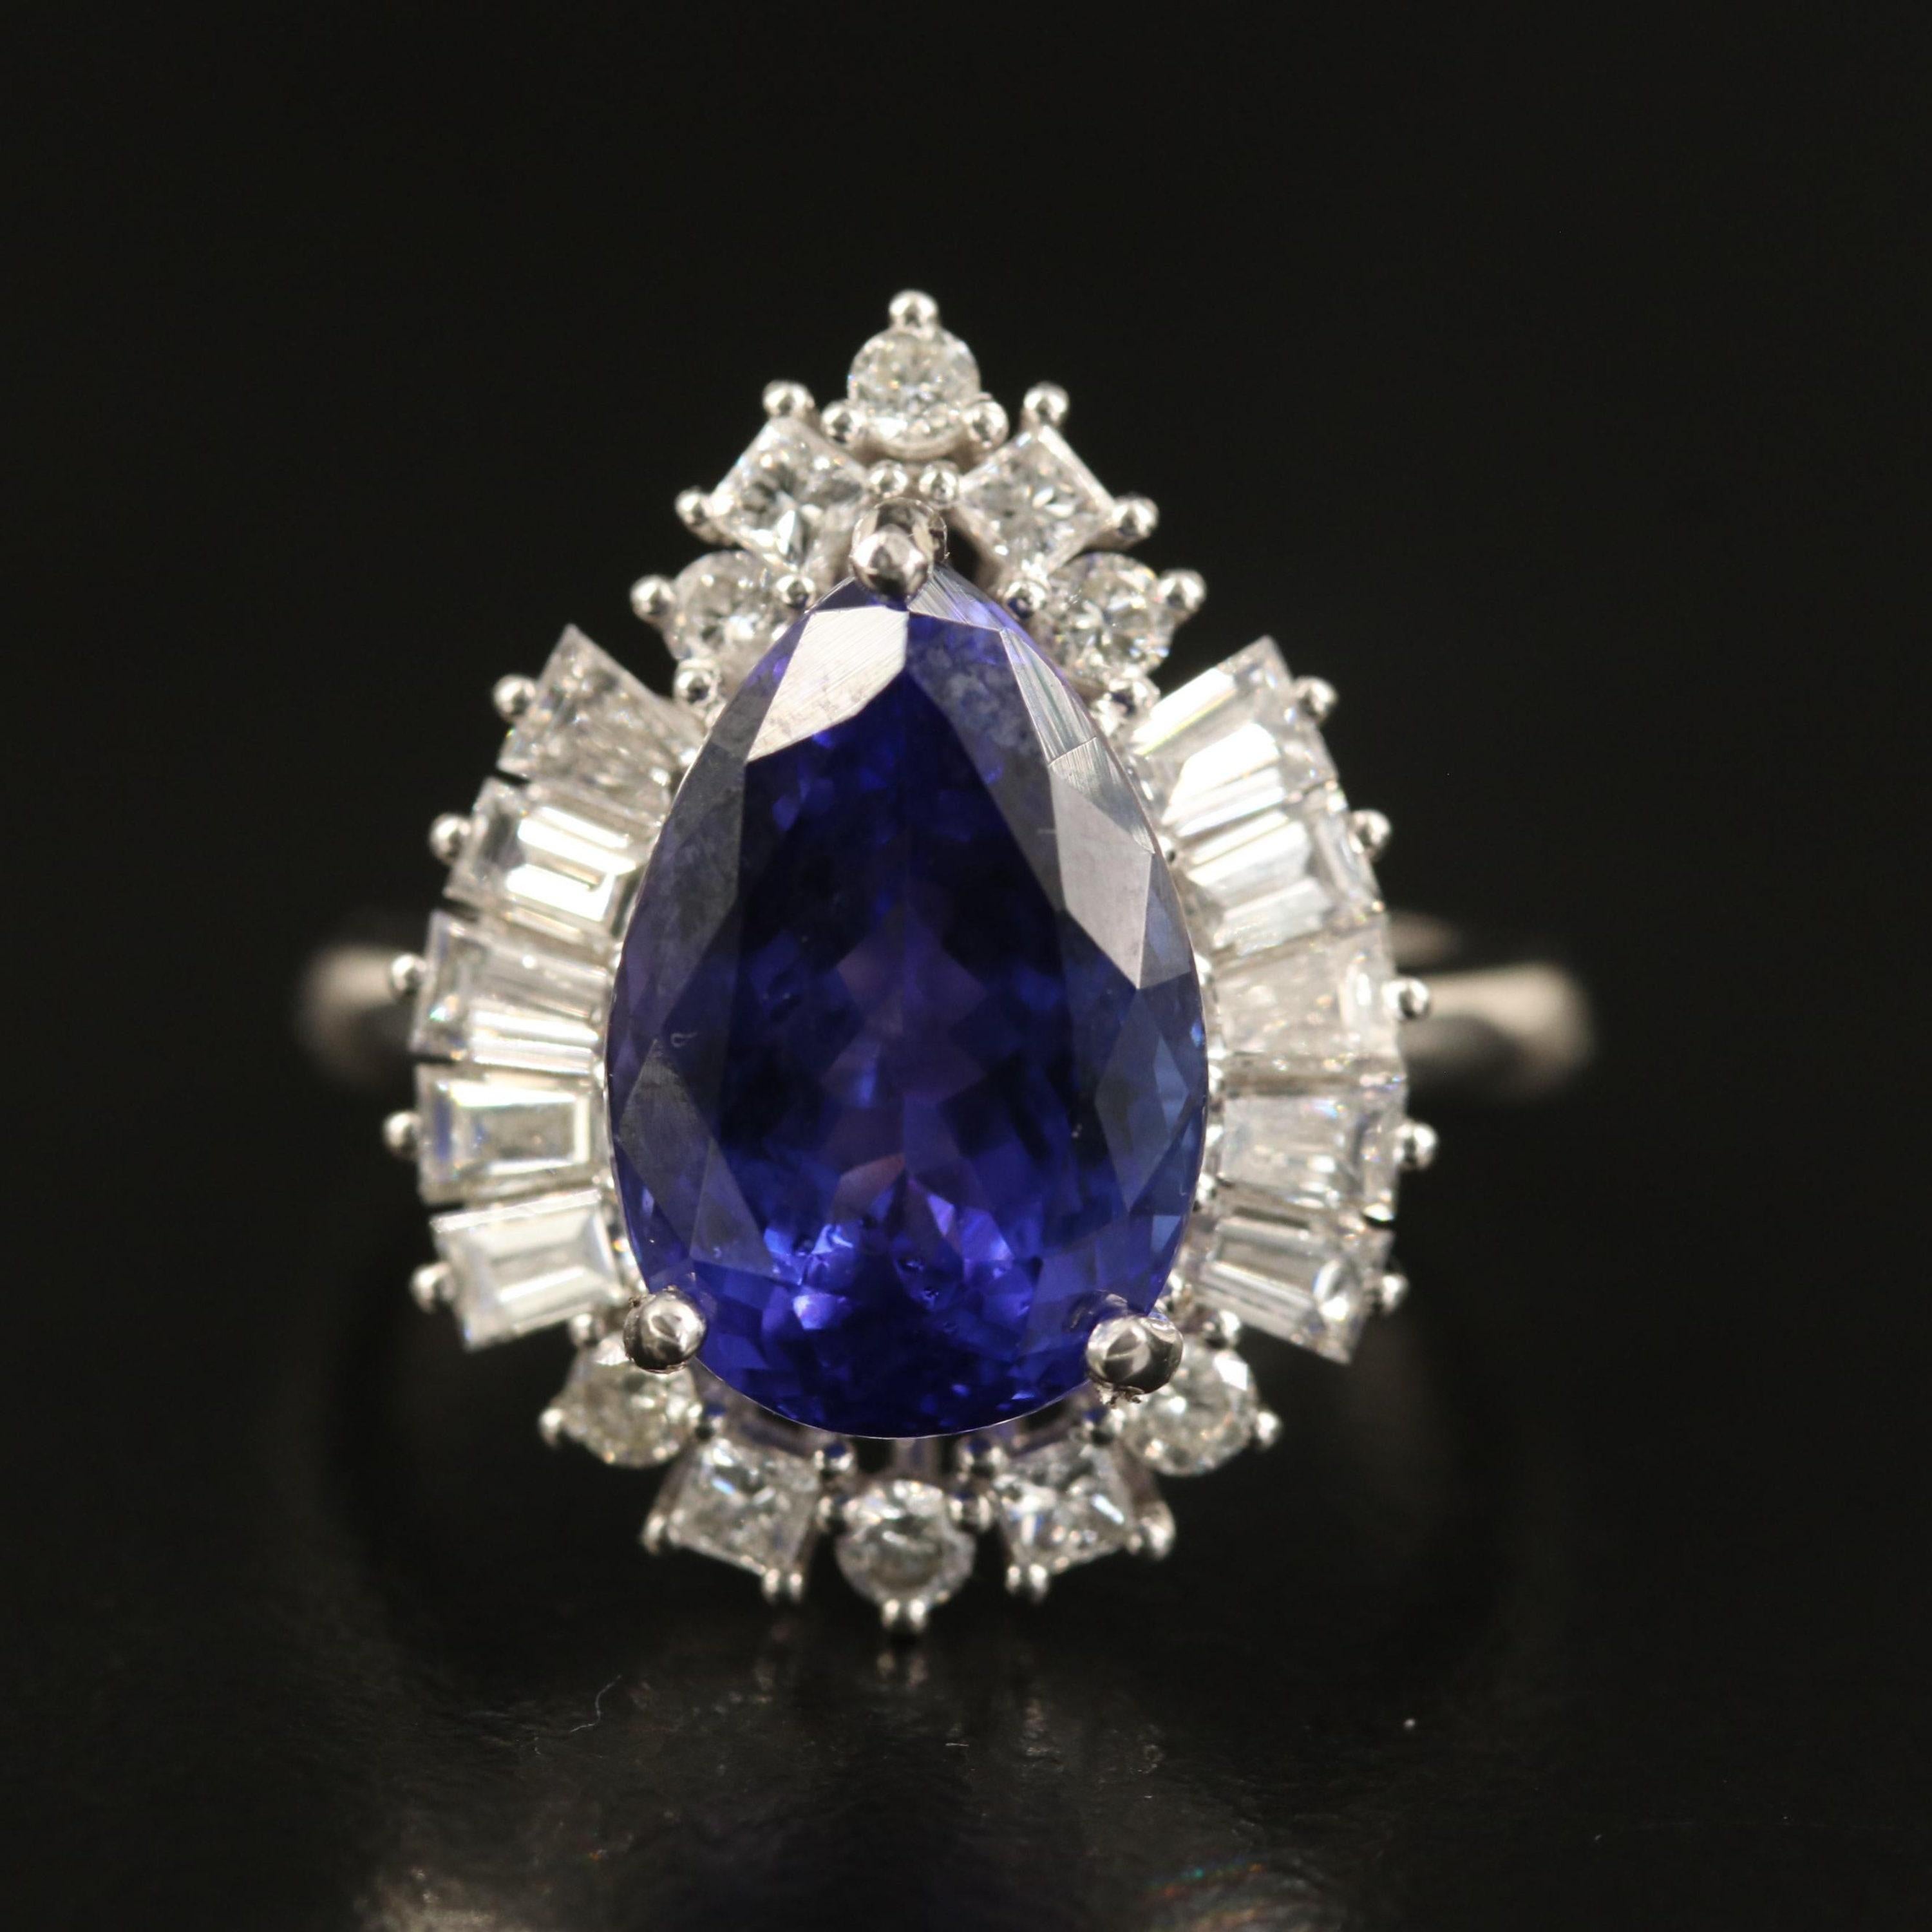 For Sale:  5.9 Carat Pear Cut Tanzanite Engagement Ring Art Deco Halo Diamond Wedding Ring  6